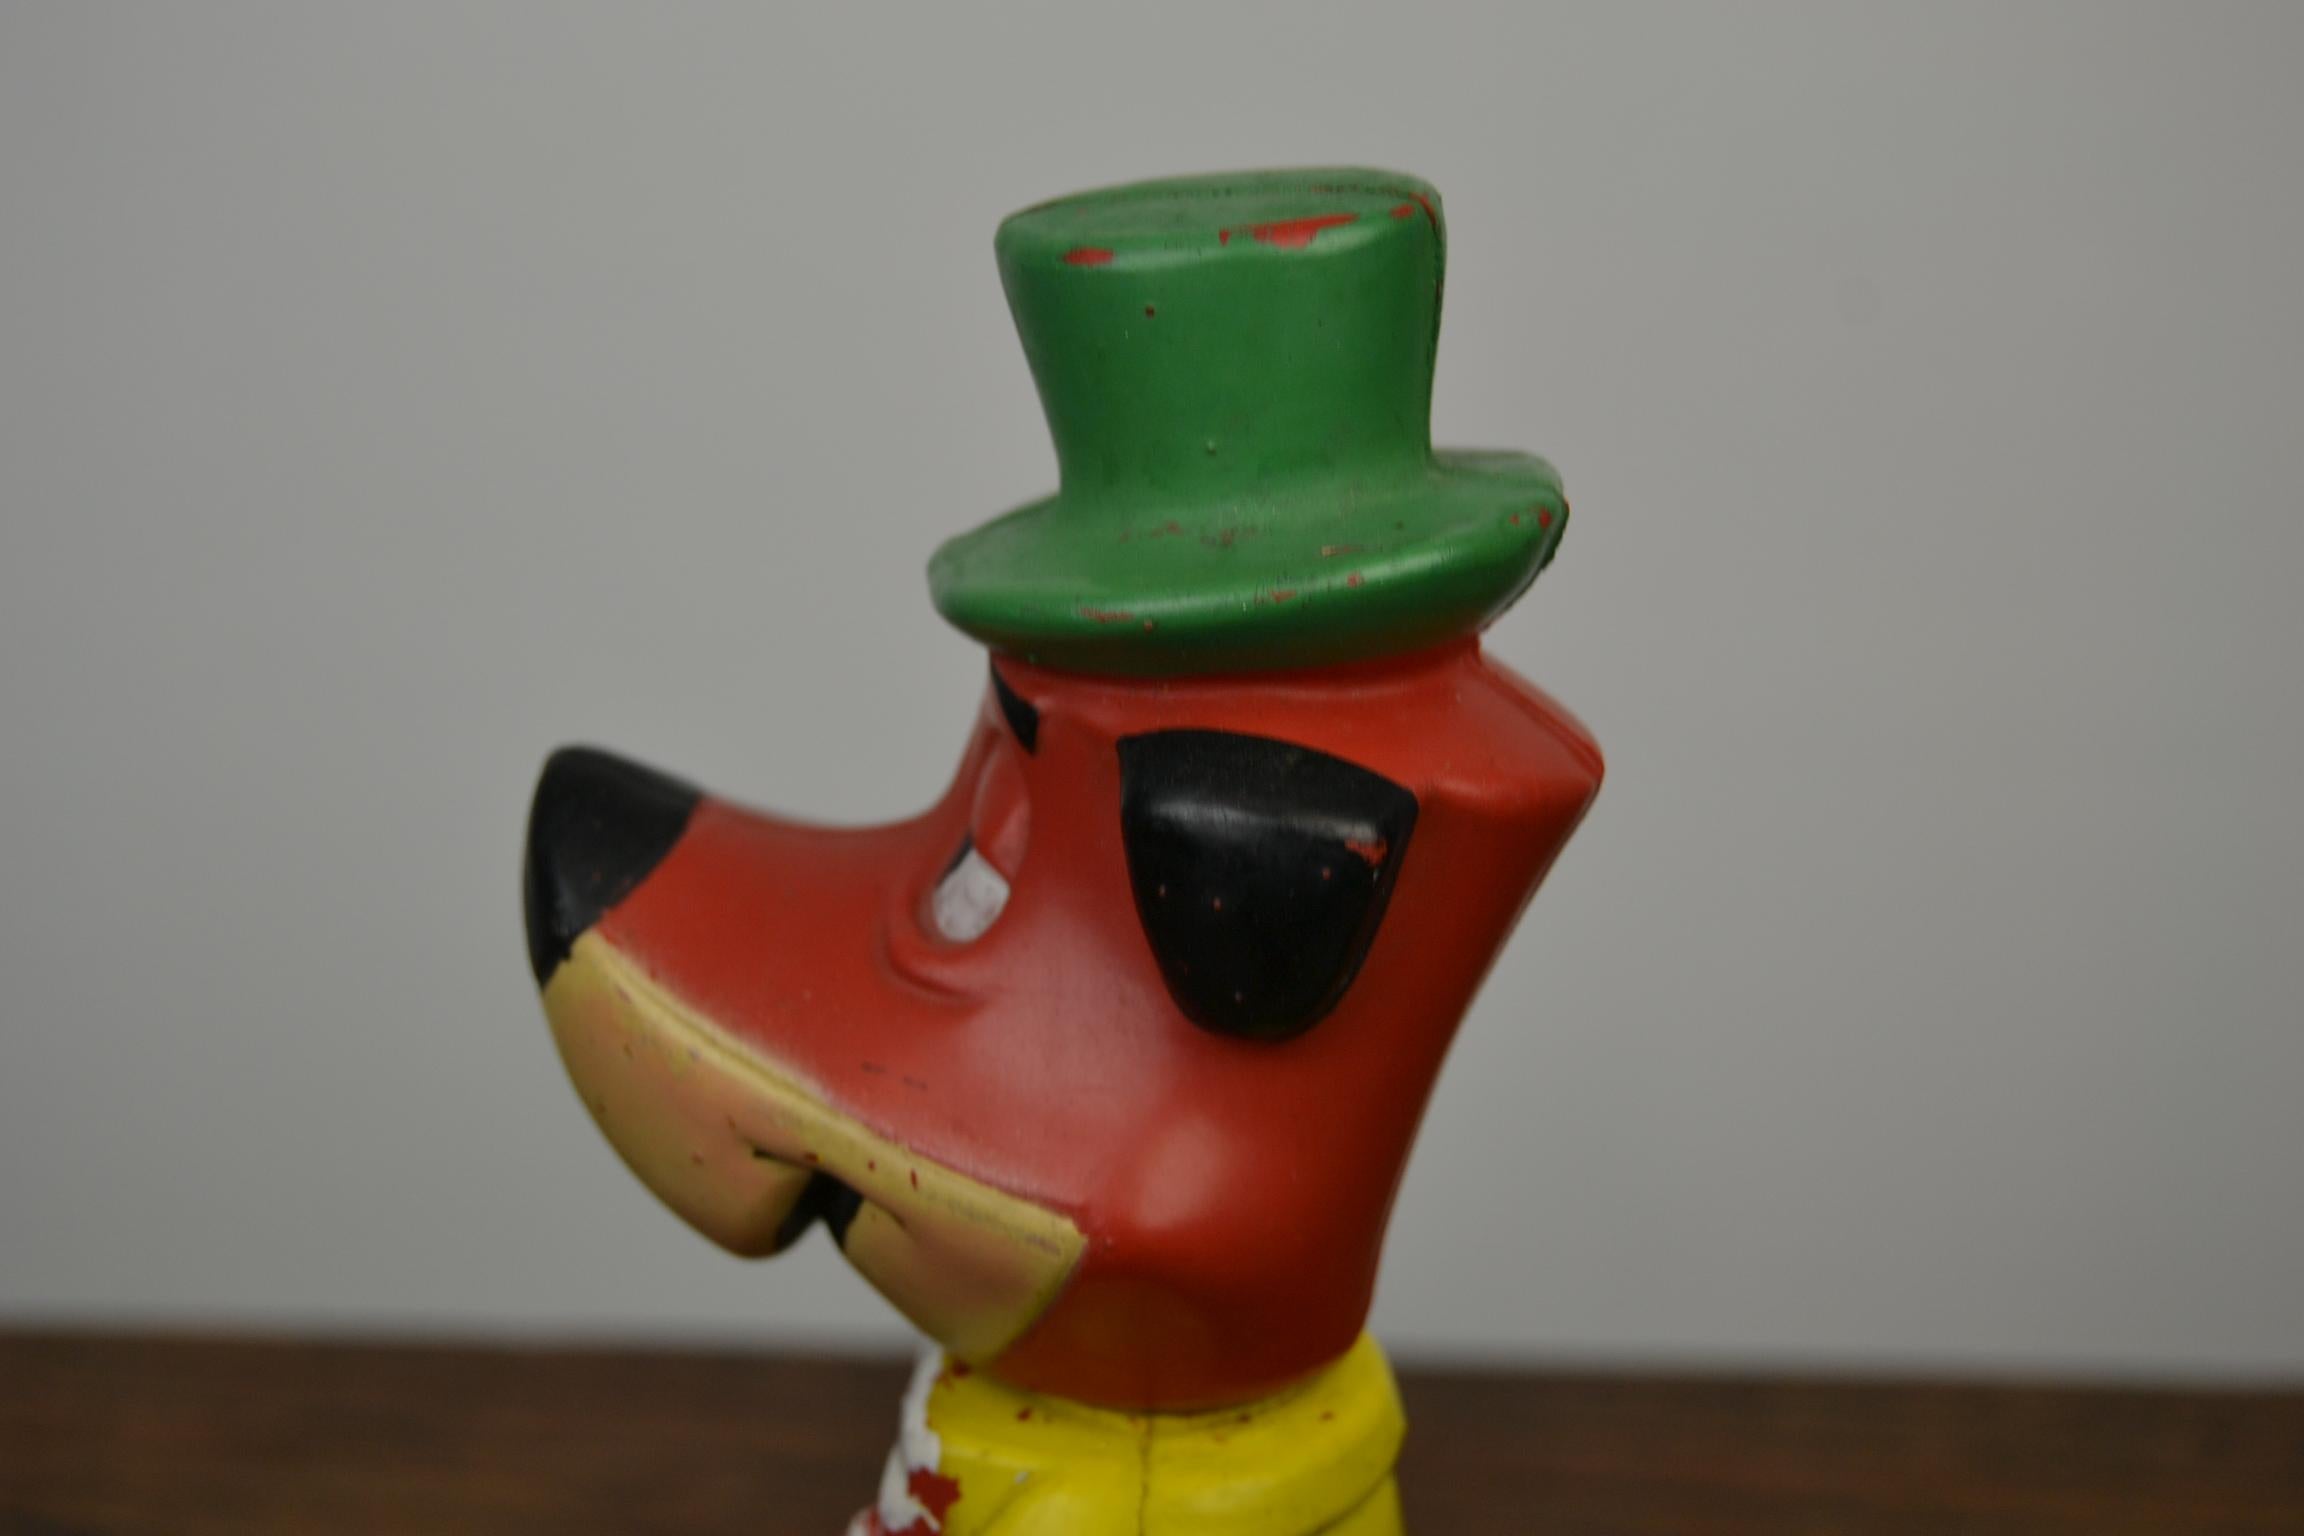 1965 Hanna Barbera Huckleberry Hound Figurine by Goebel, W.Germany 5